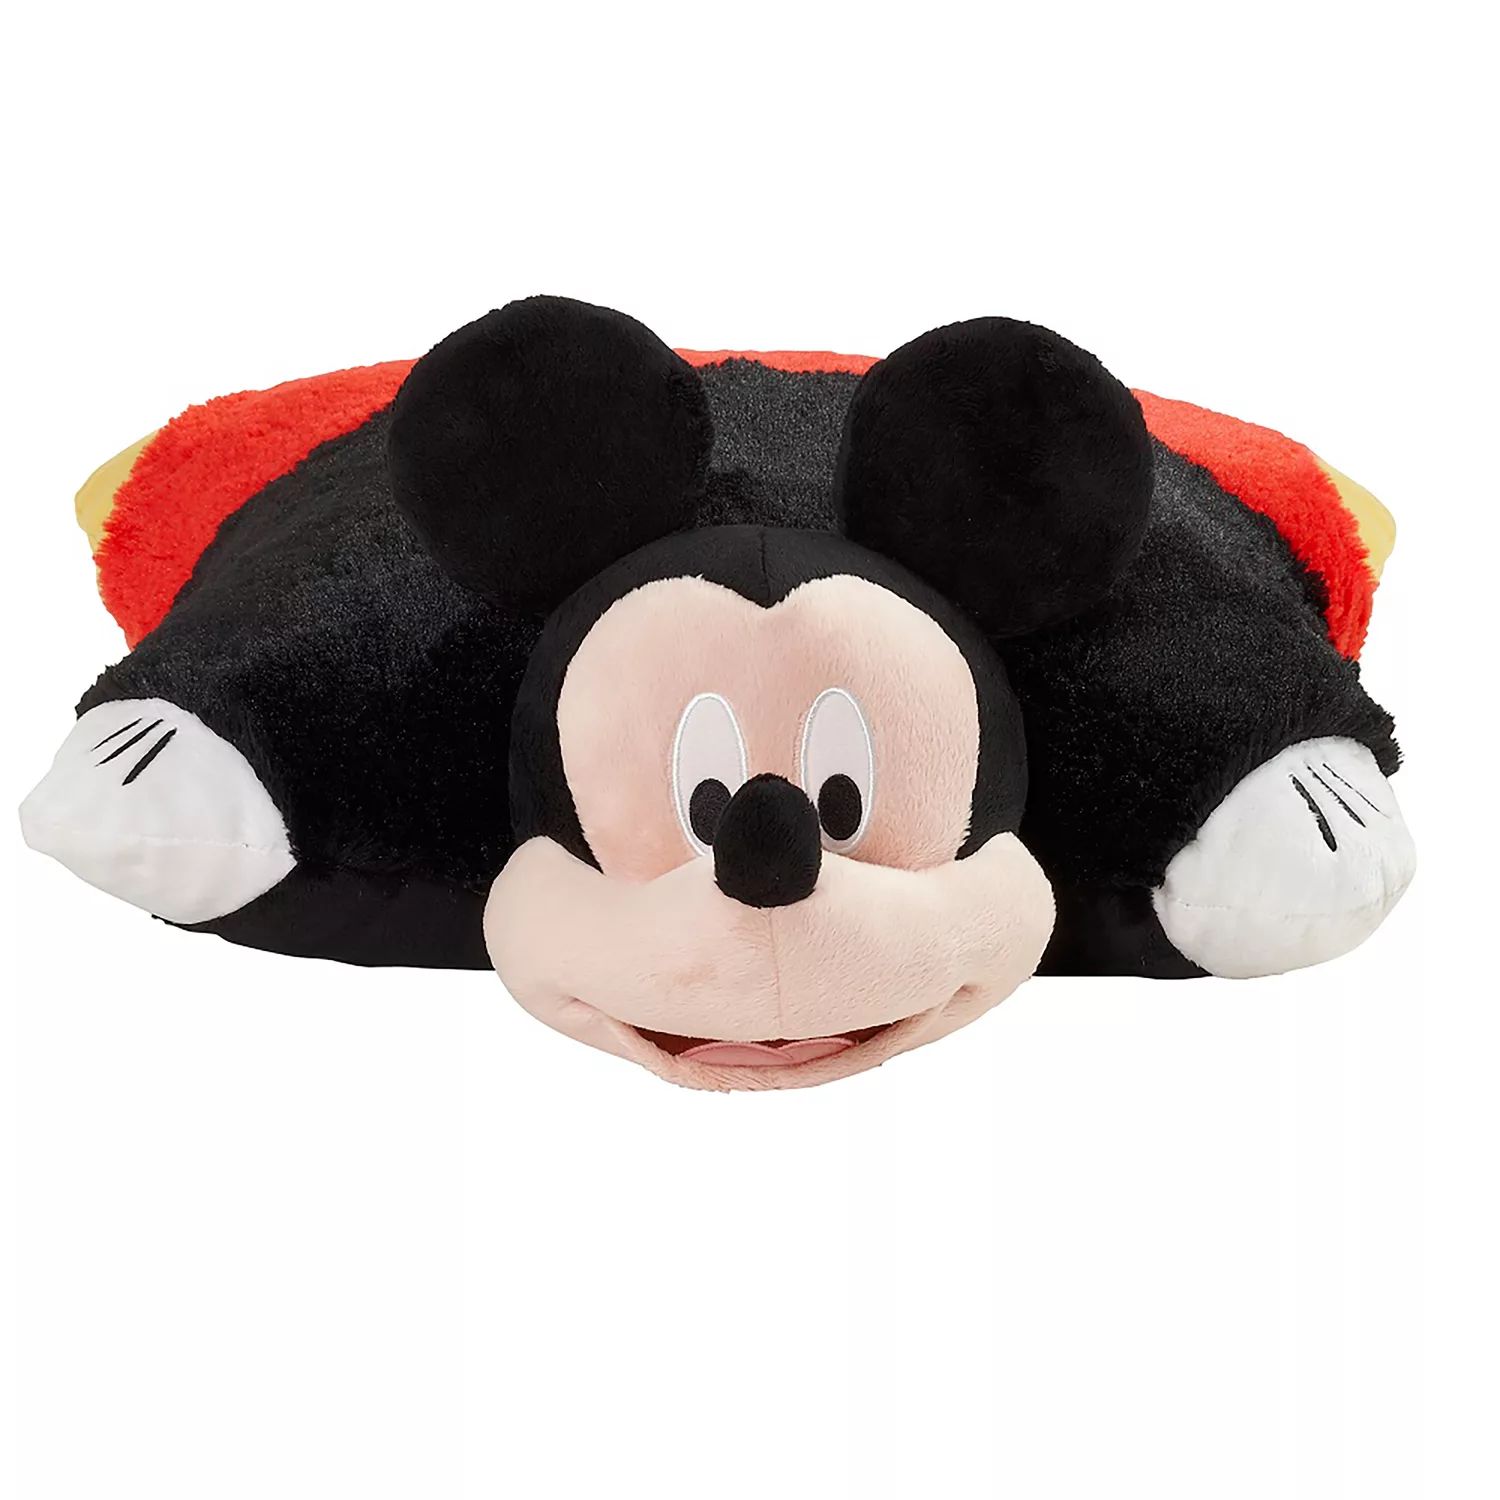 Плюшевая игрушка Disney's Микки Маус от Pillow Pets Pillow Pets